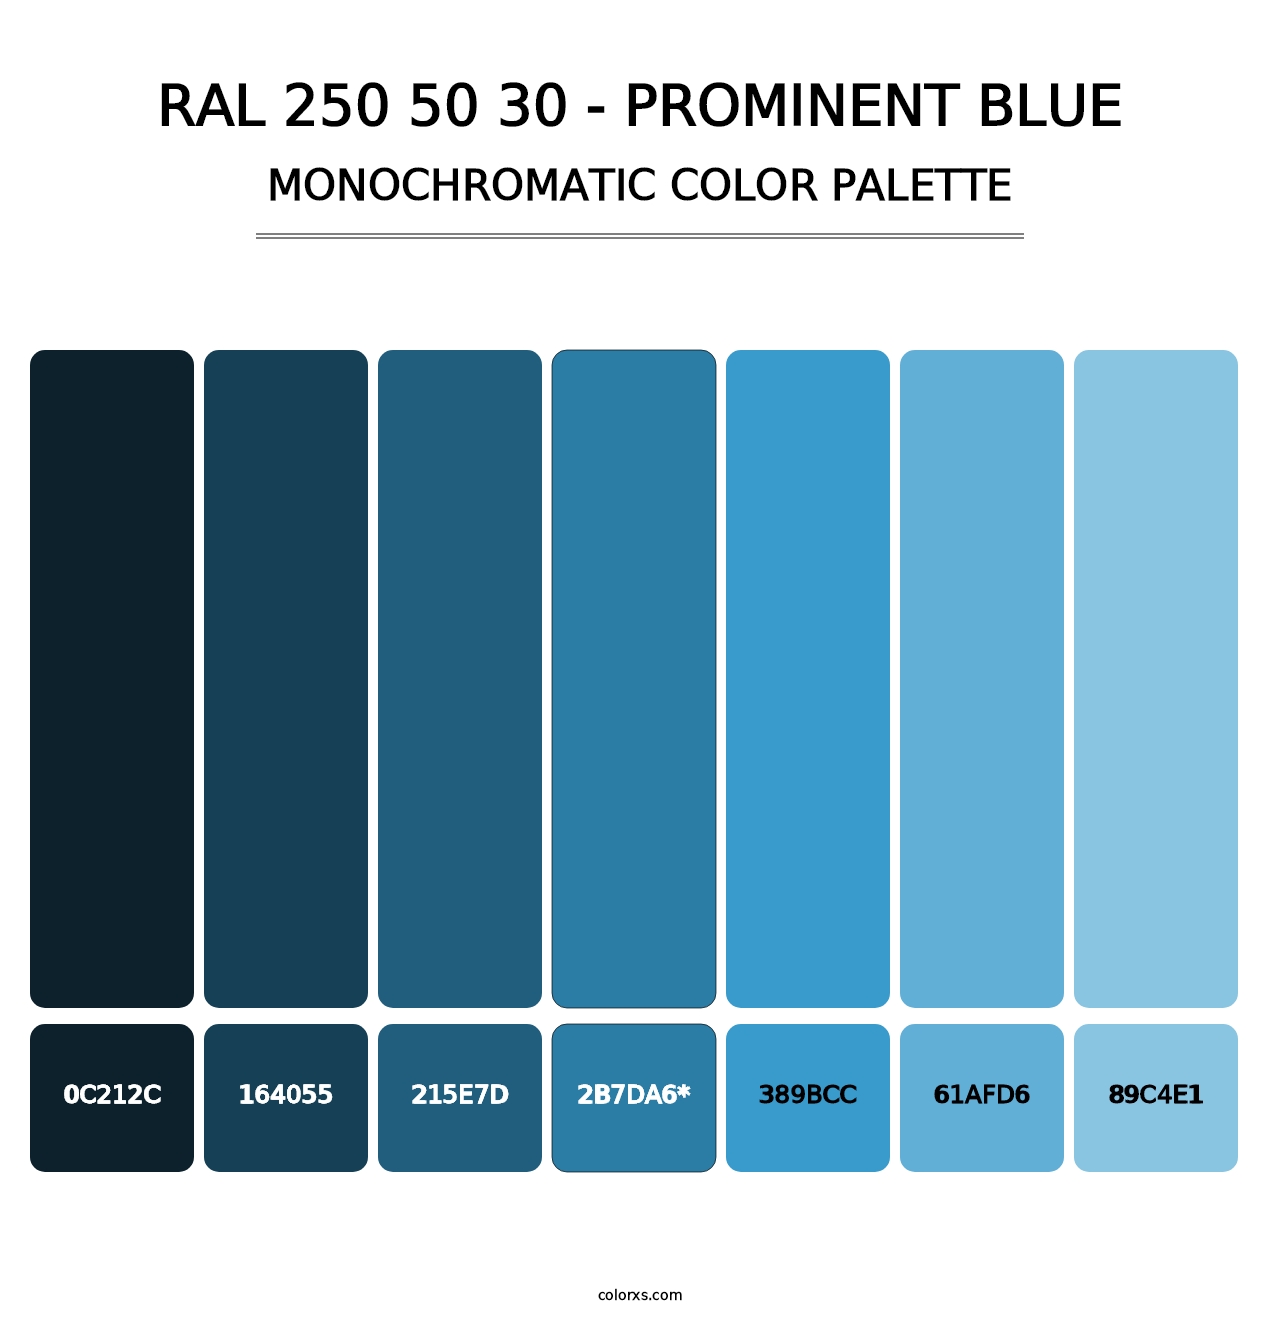 RAL 250 50 30 - Prominent Blue - Monochromatic Color Palette